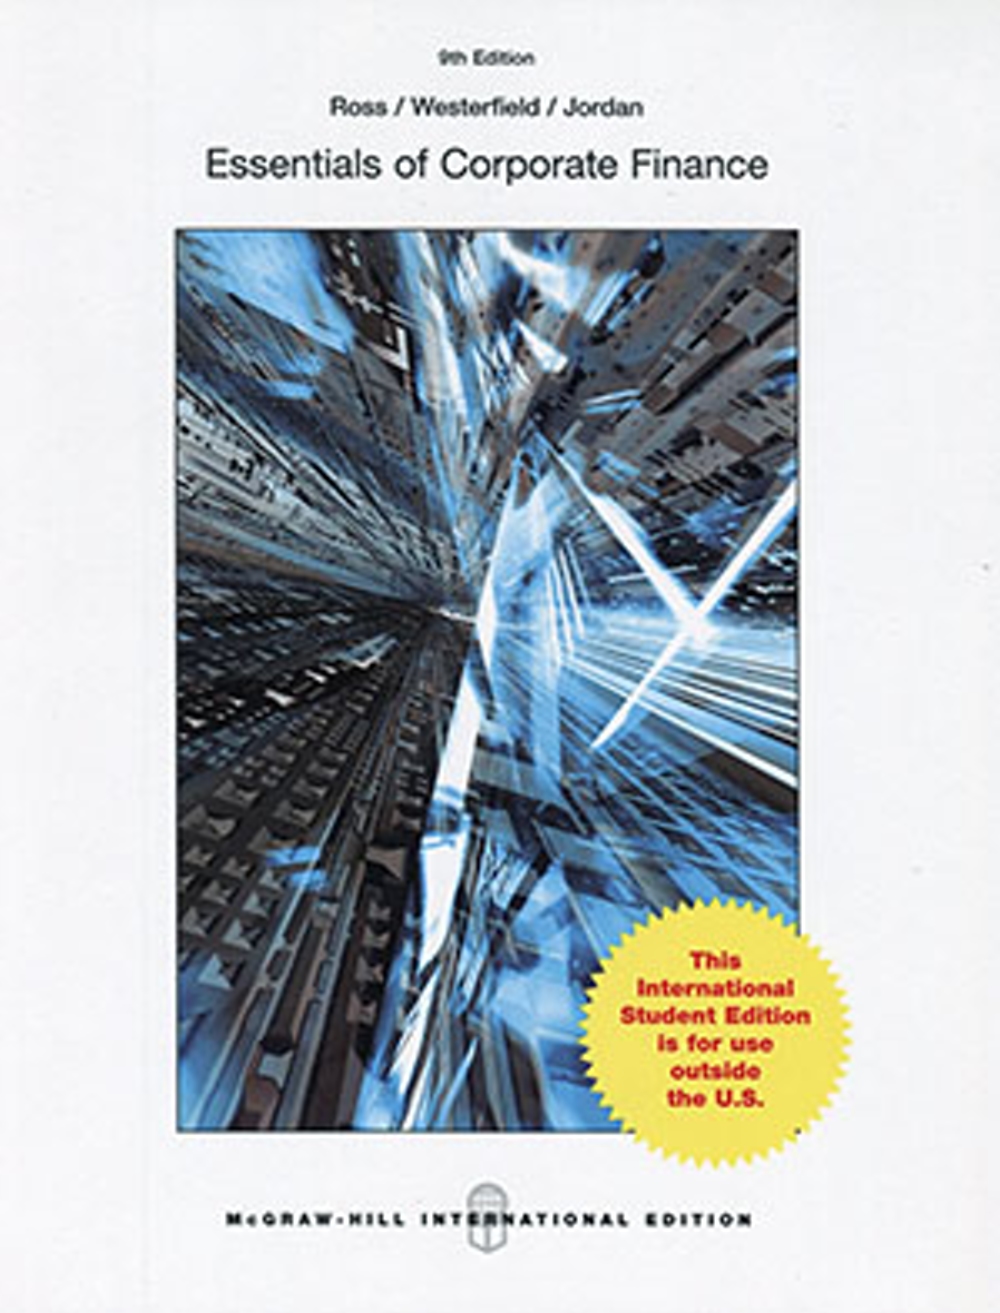 Essentials of Corporate Finance(9版)